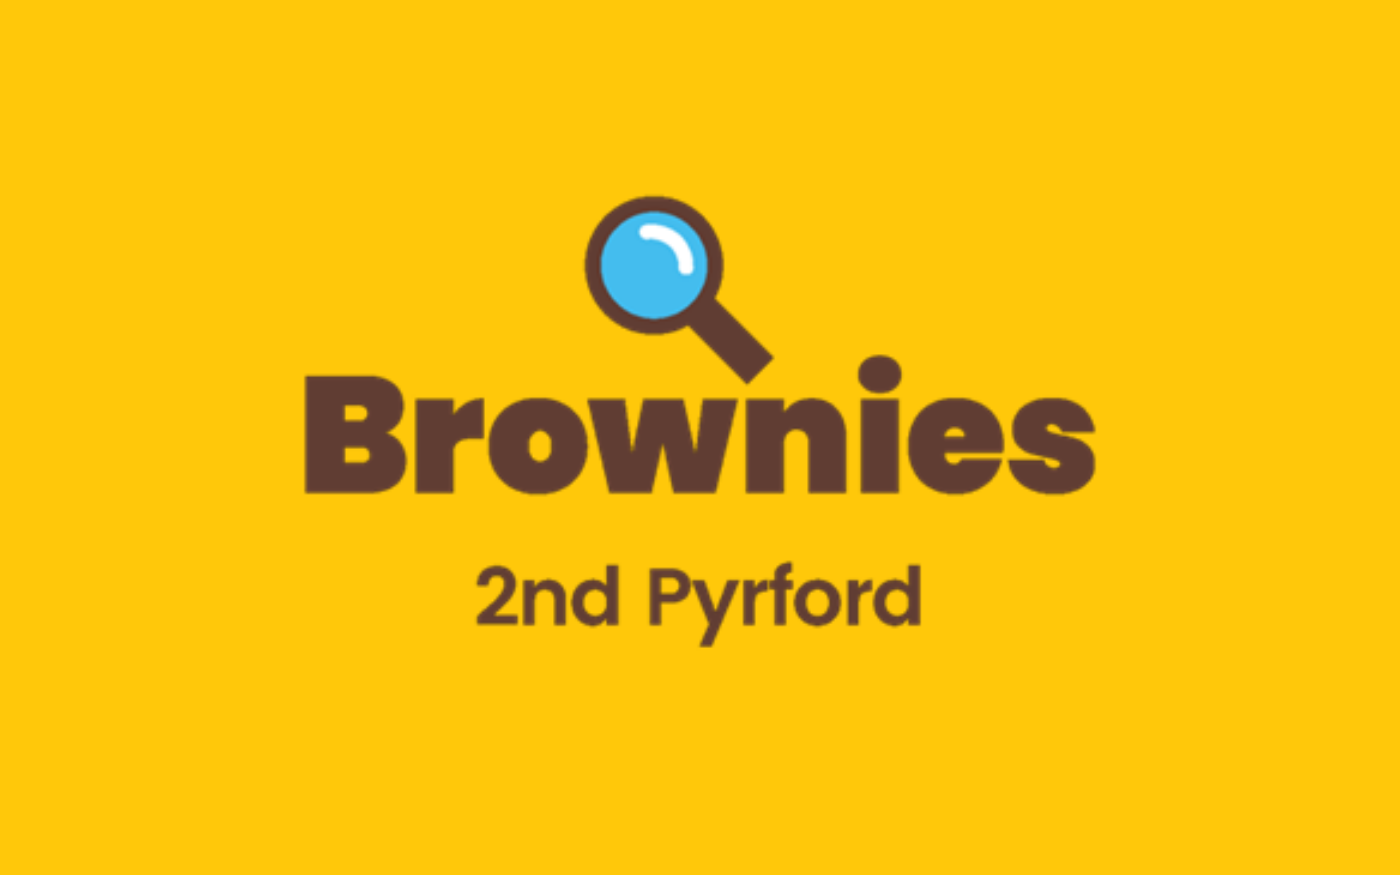 2nd Pyrford Brownies logo